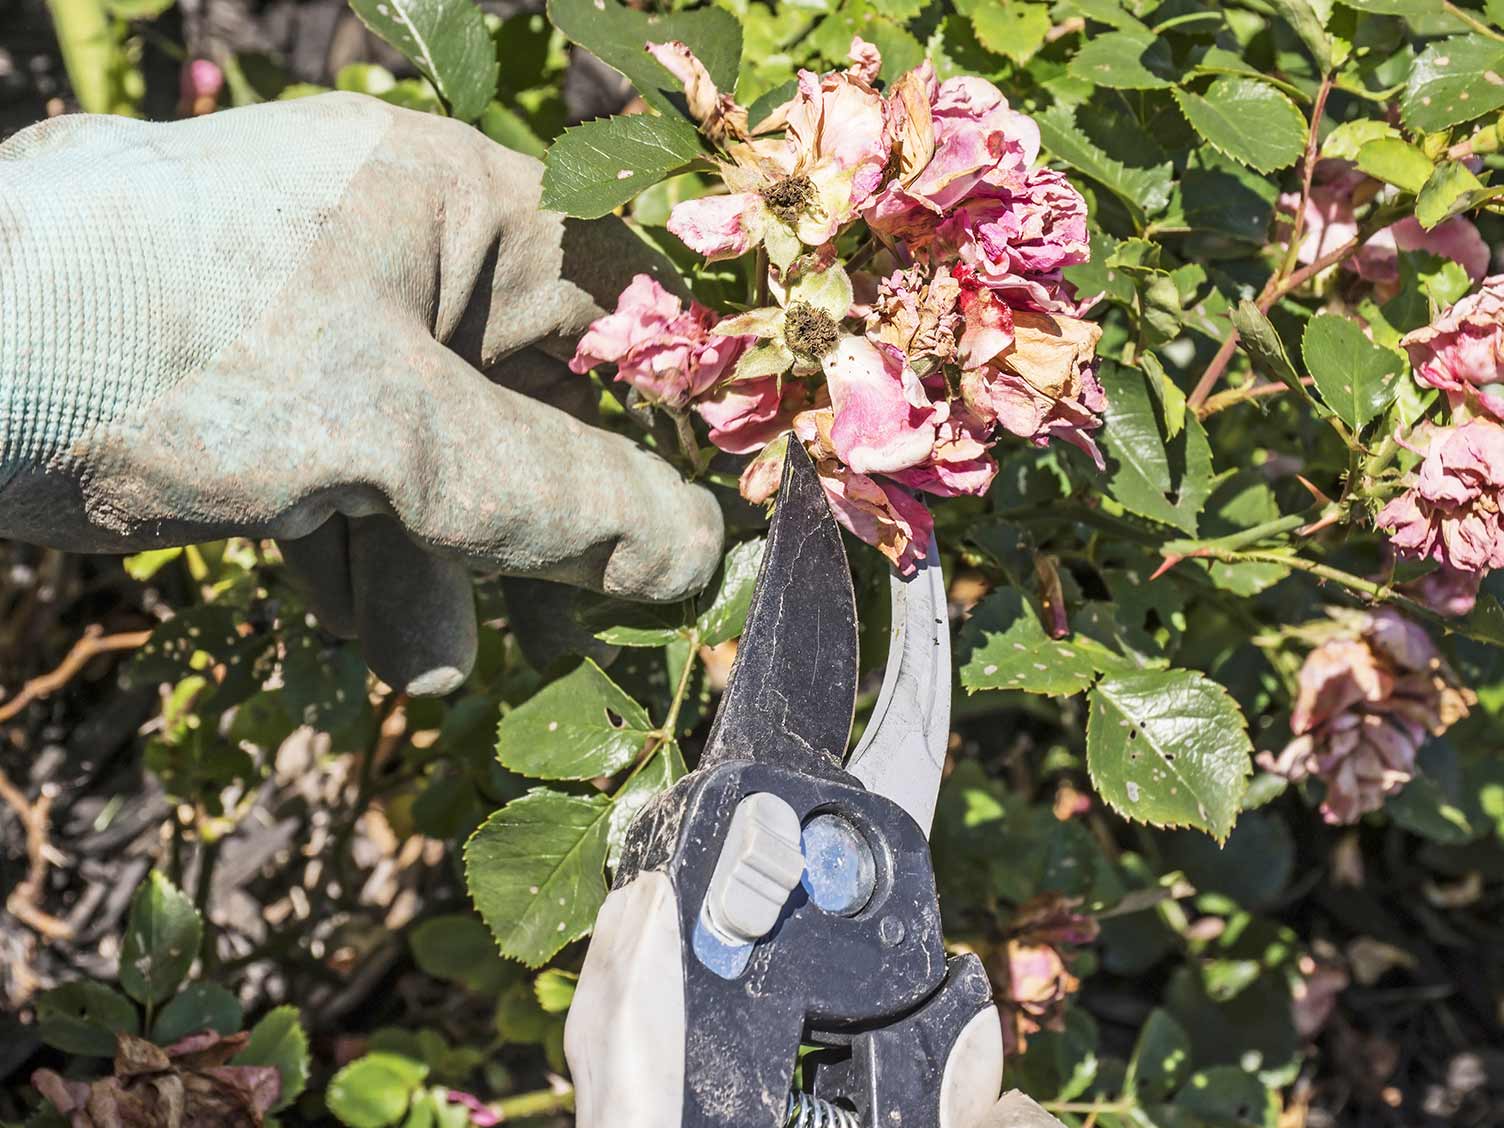 Deadheading/pruning roses